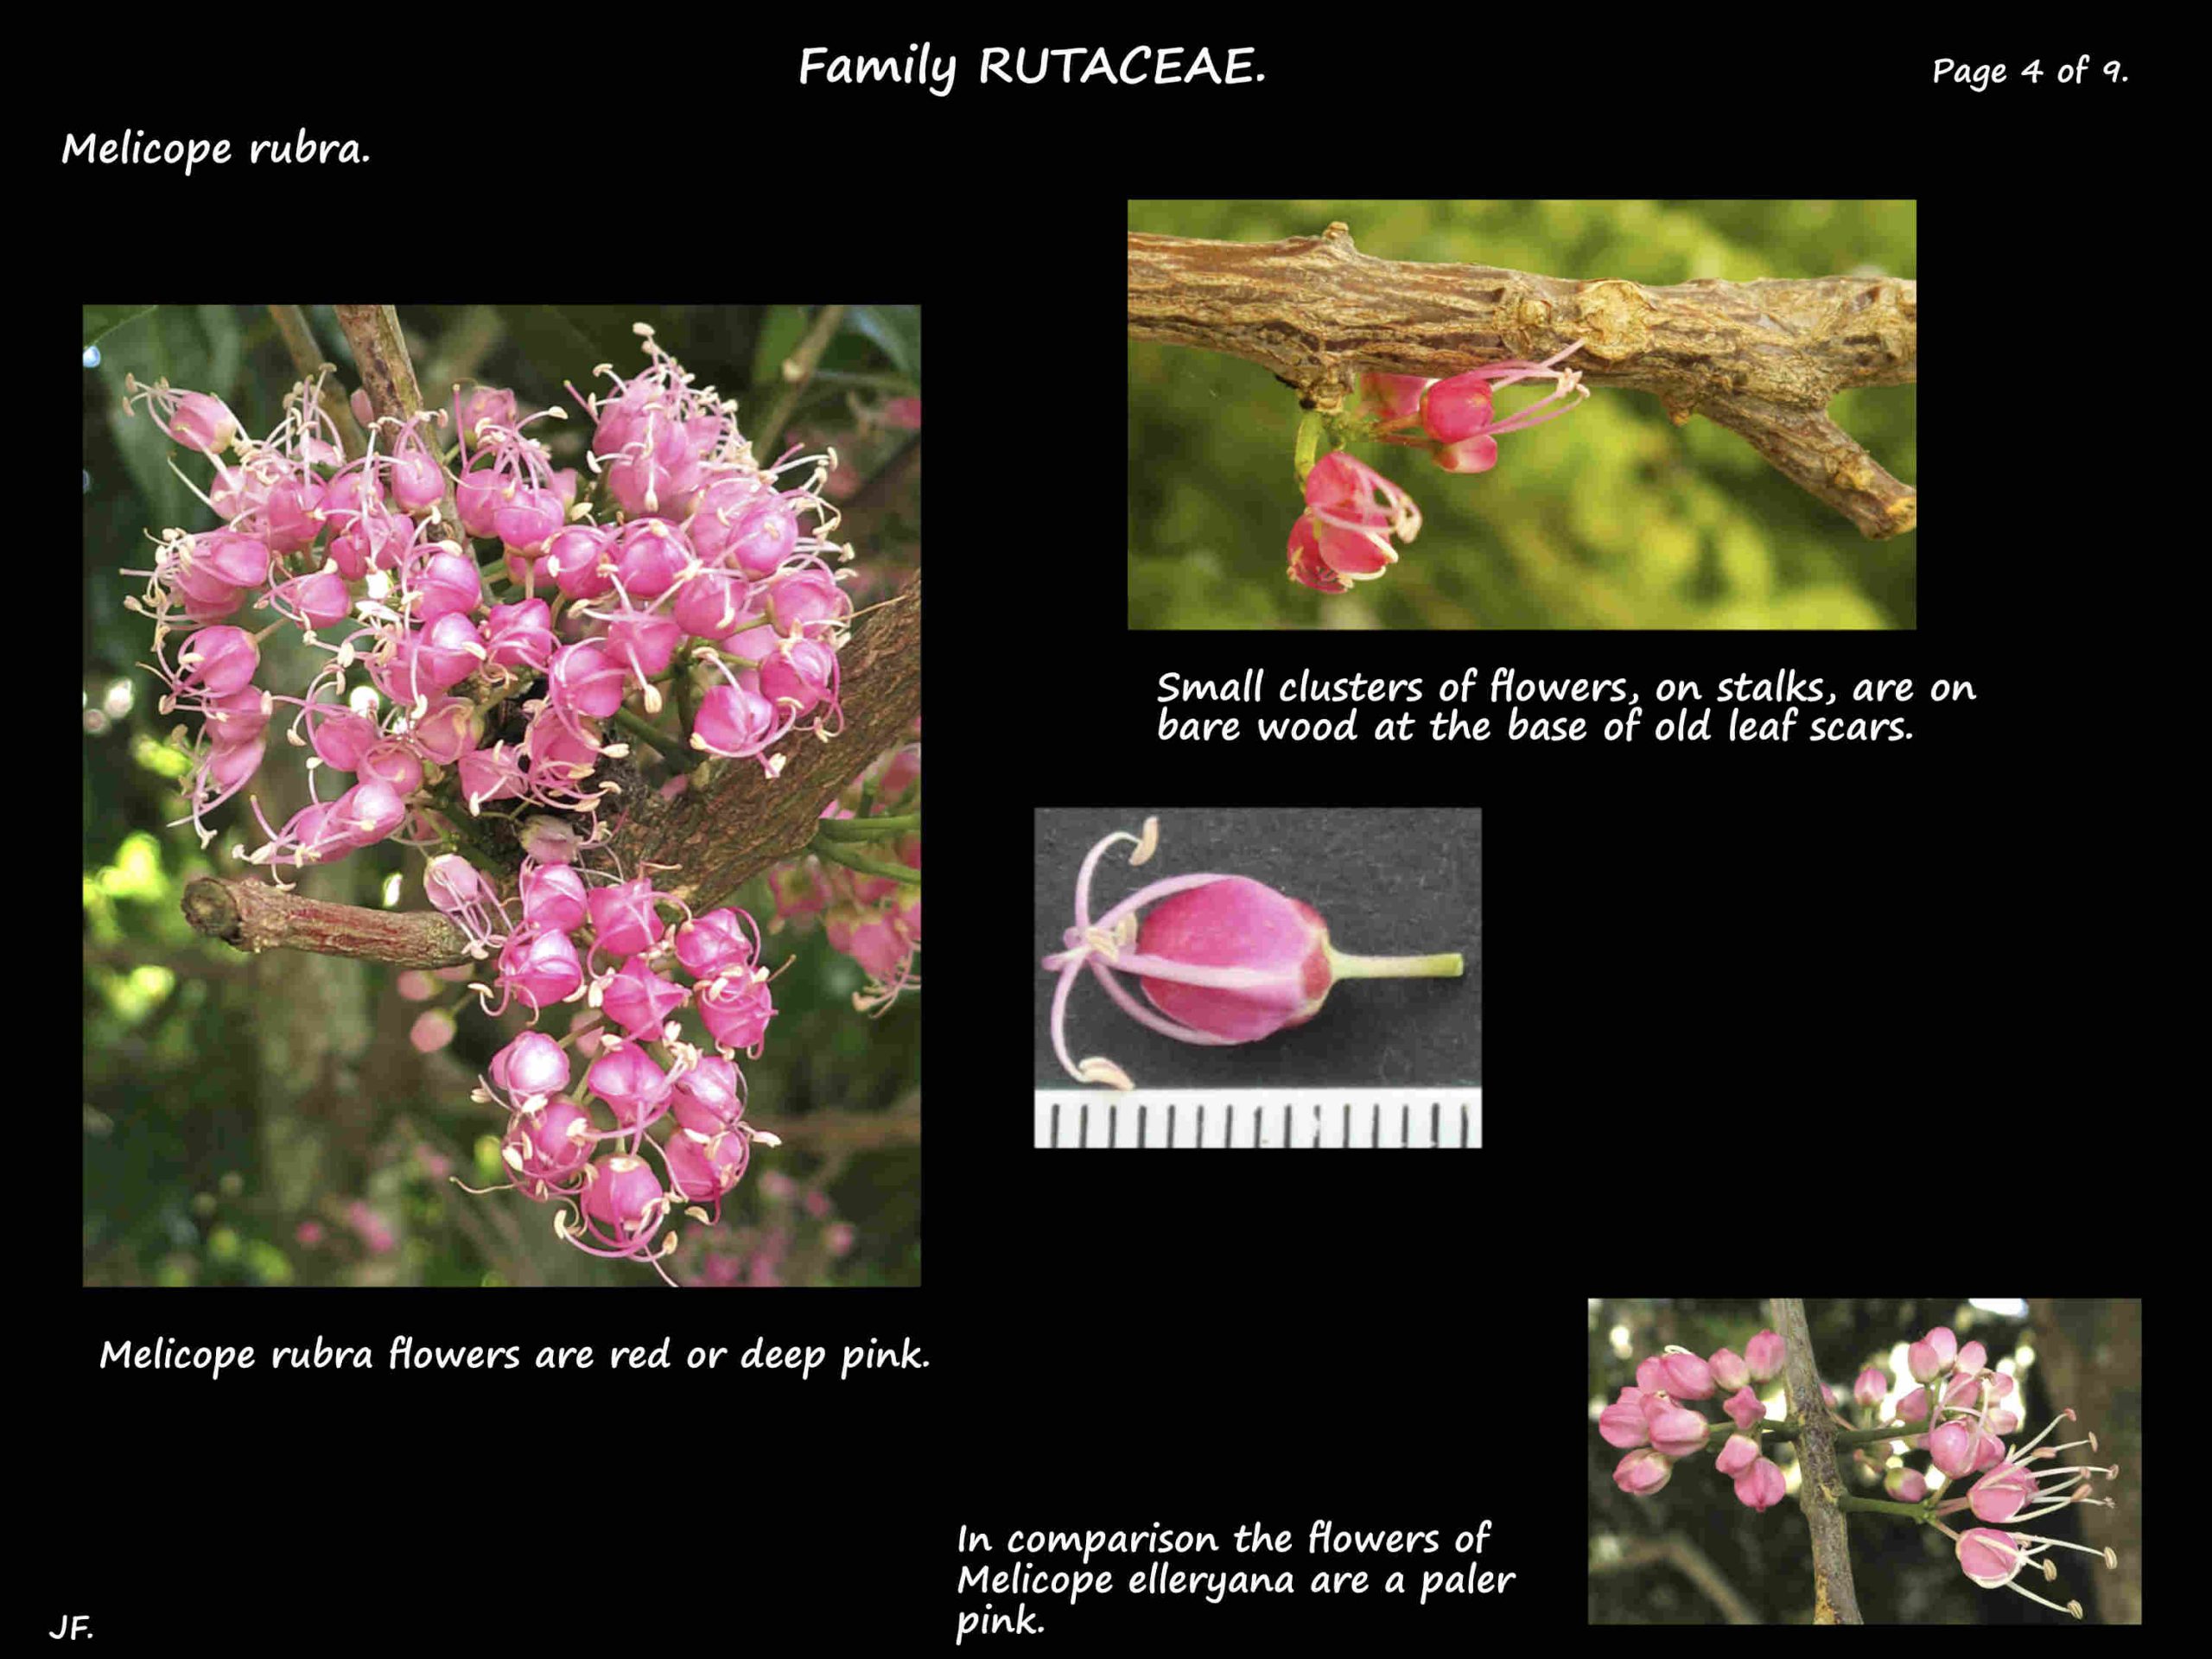 4 Melicope rubra flowers